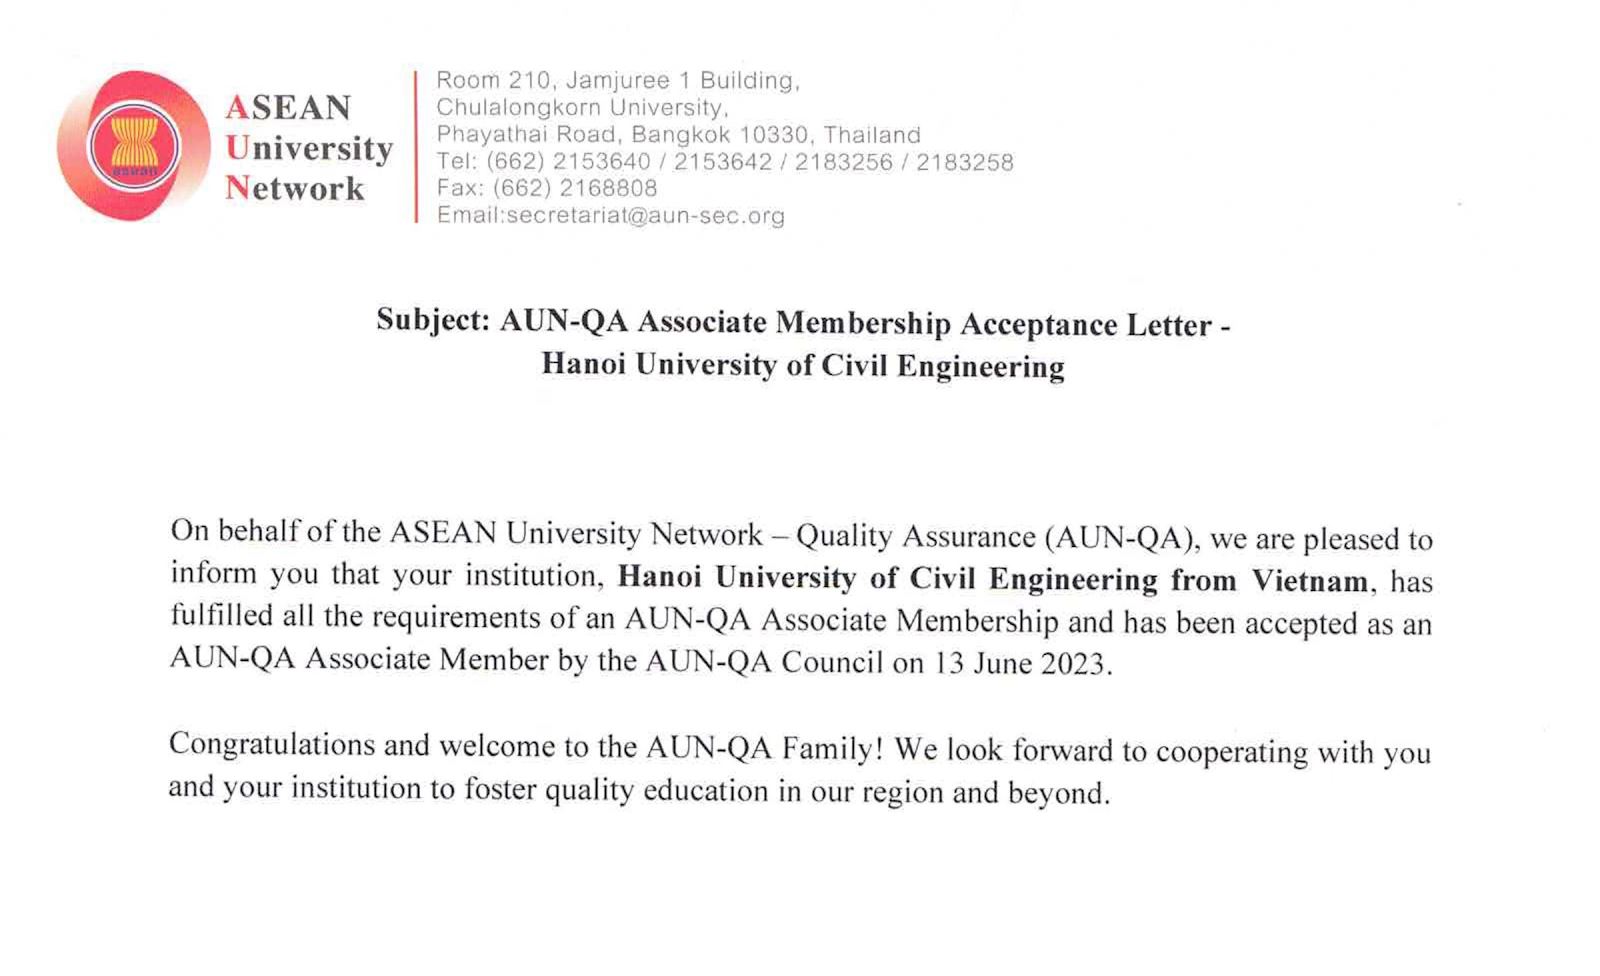 HANOI UNIVERSITY OF CIVIL ENGINEERING BECOMES AN ASSOCIATE MEMBER OF THE ASEAN UNIVERSITY NETWORK - QUALITY ASSURANCE (AUN-QA)